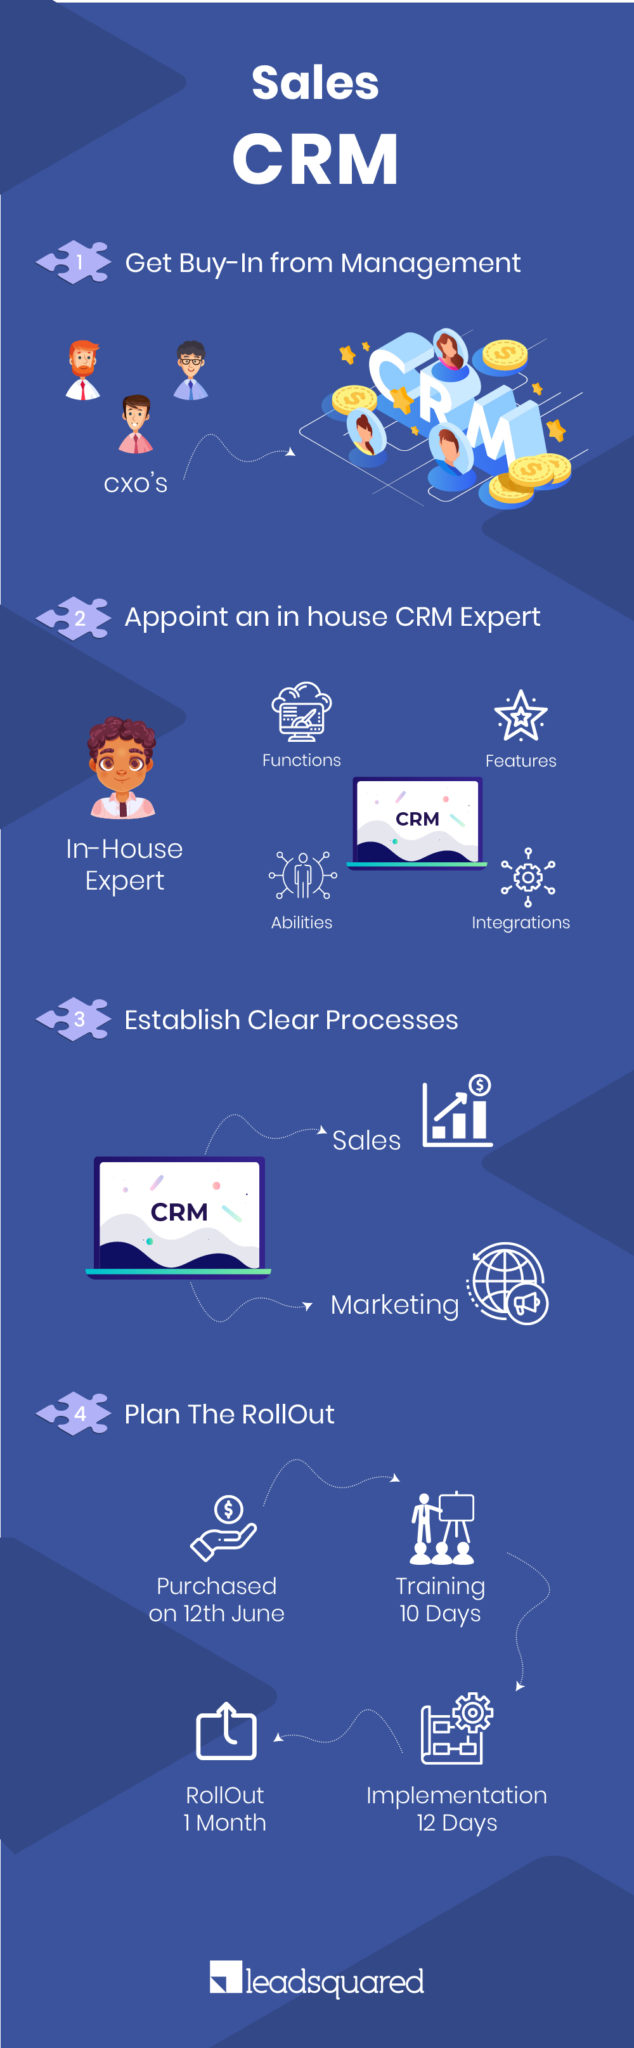 Sales CRM - infographic